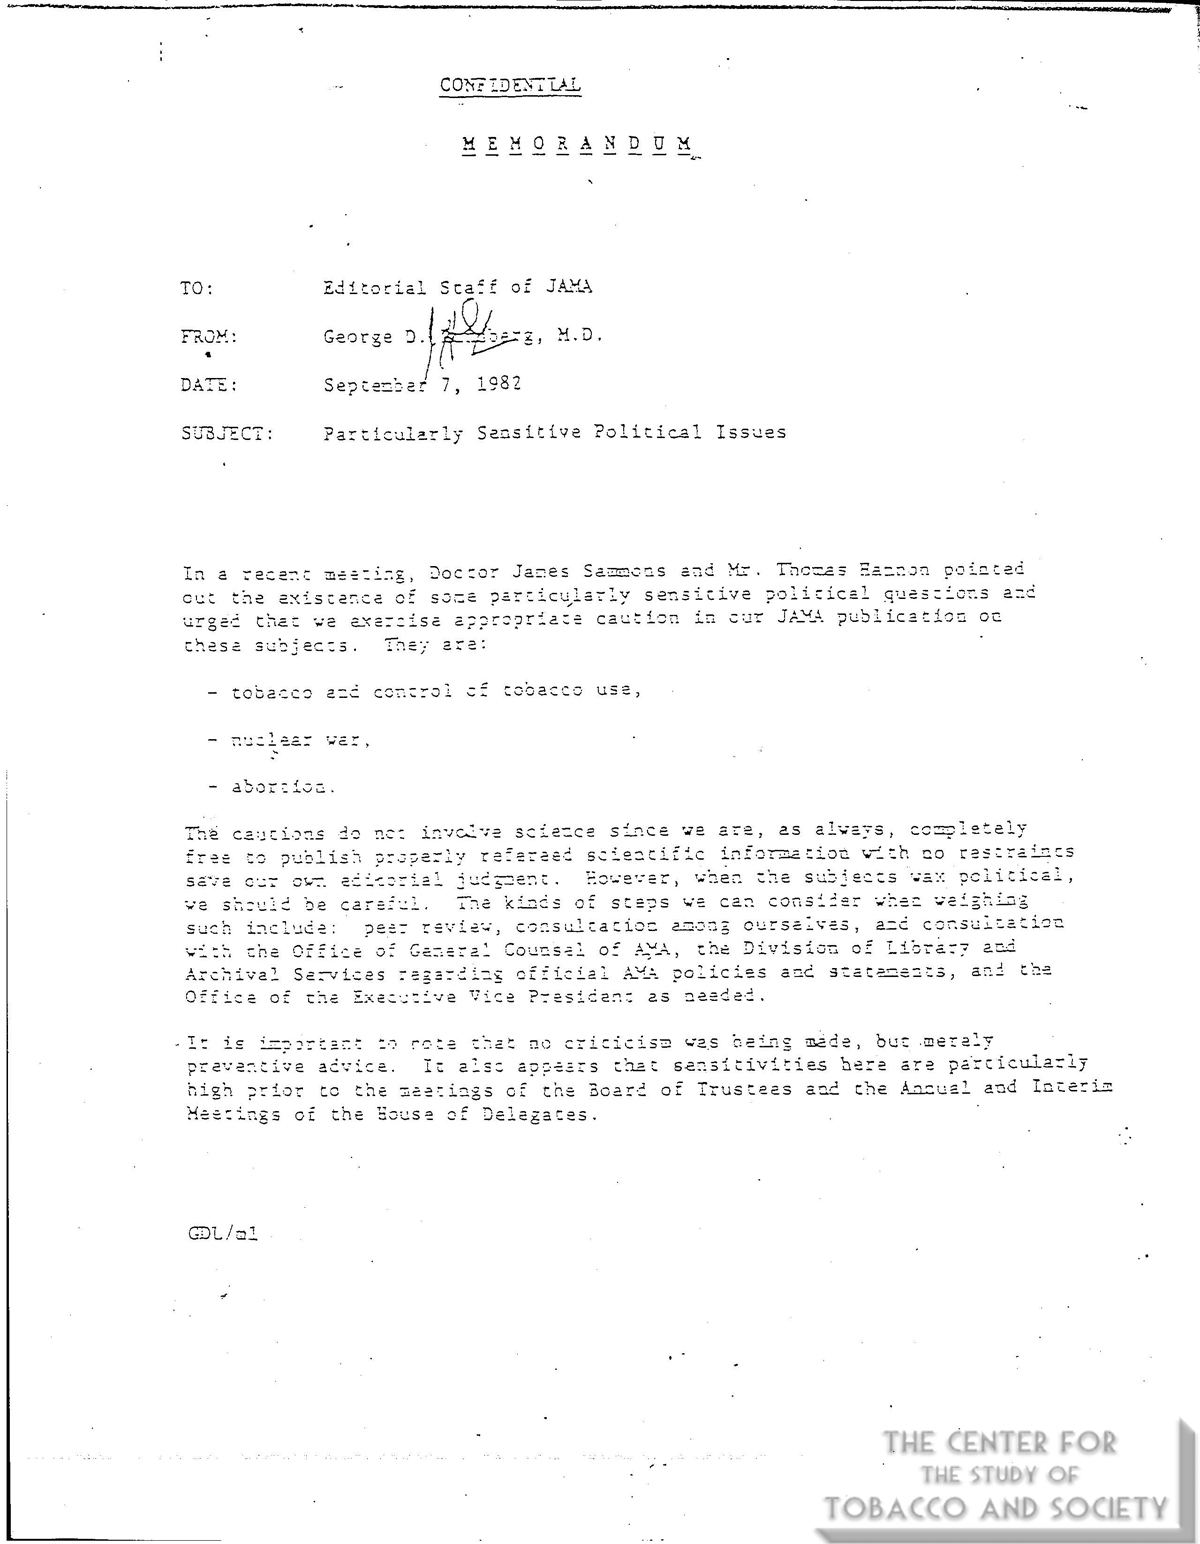 1982 09 07 George Lundberg to JAMA Editorial Staff Sensitive Political Issues